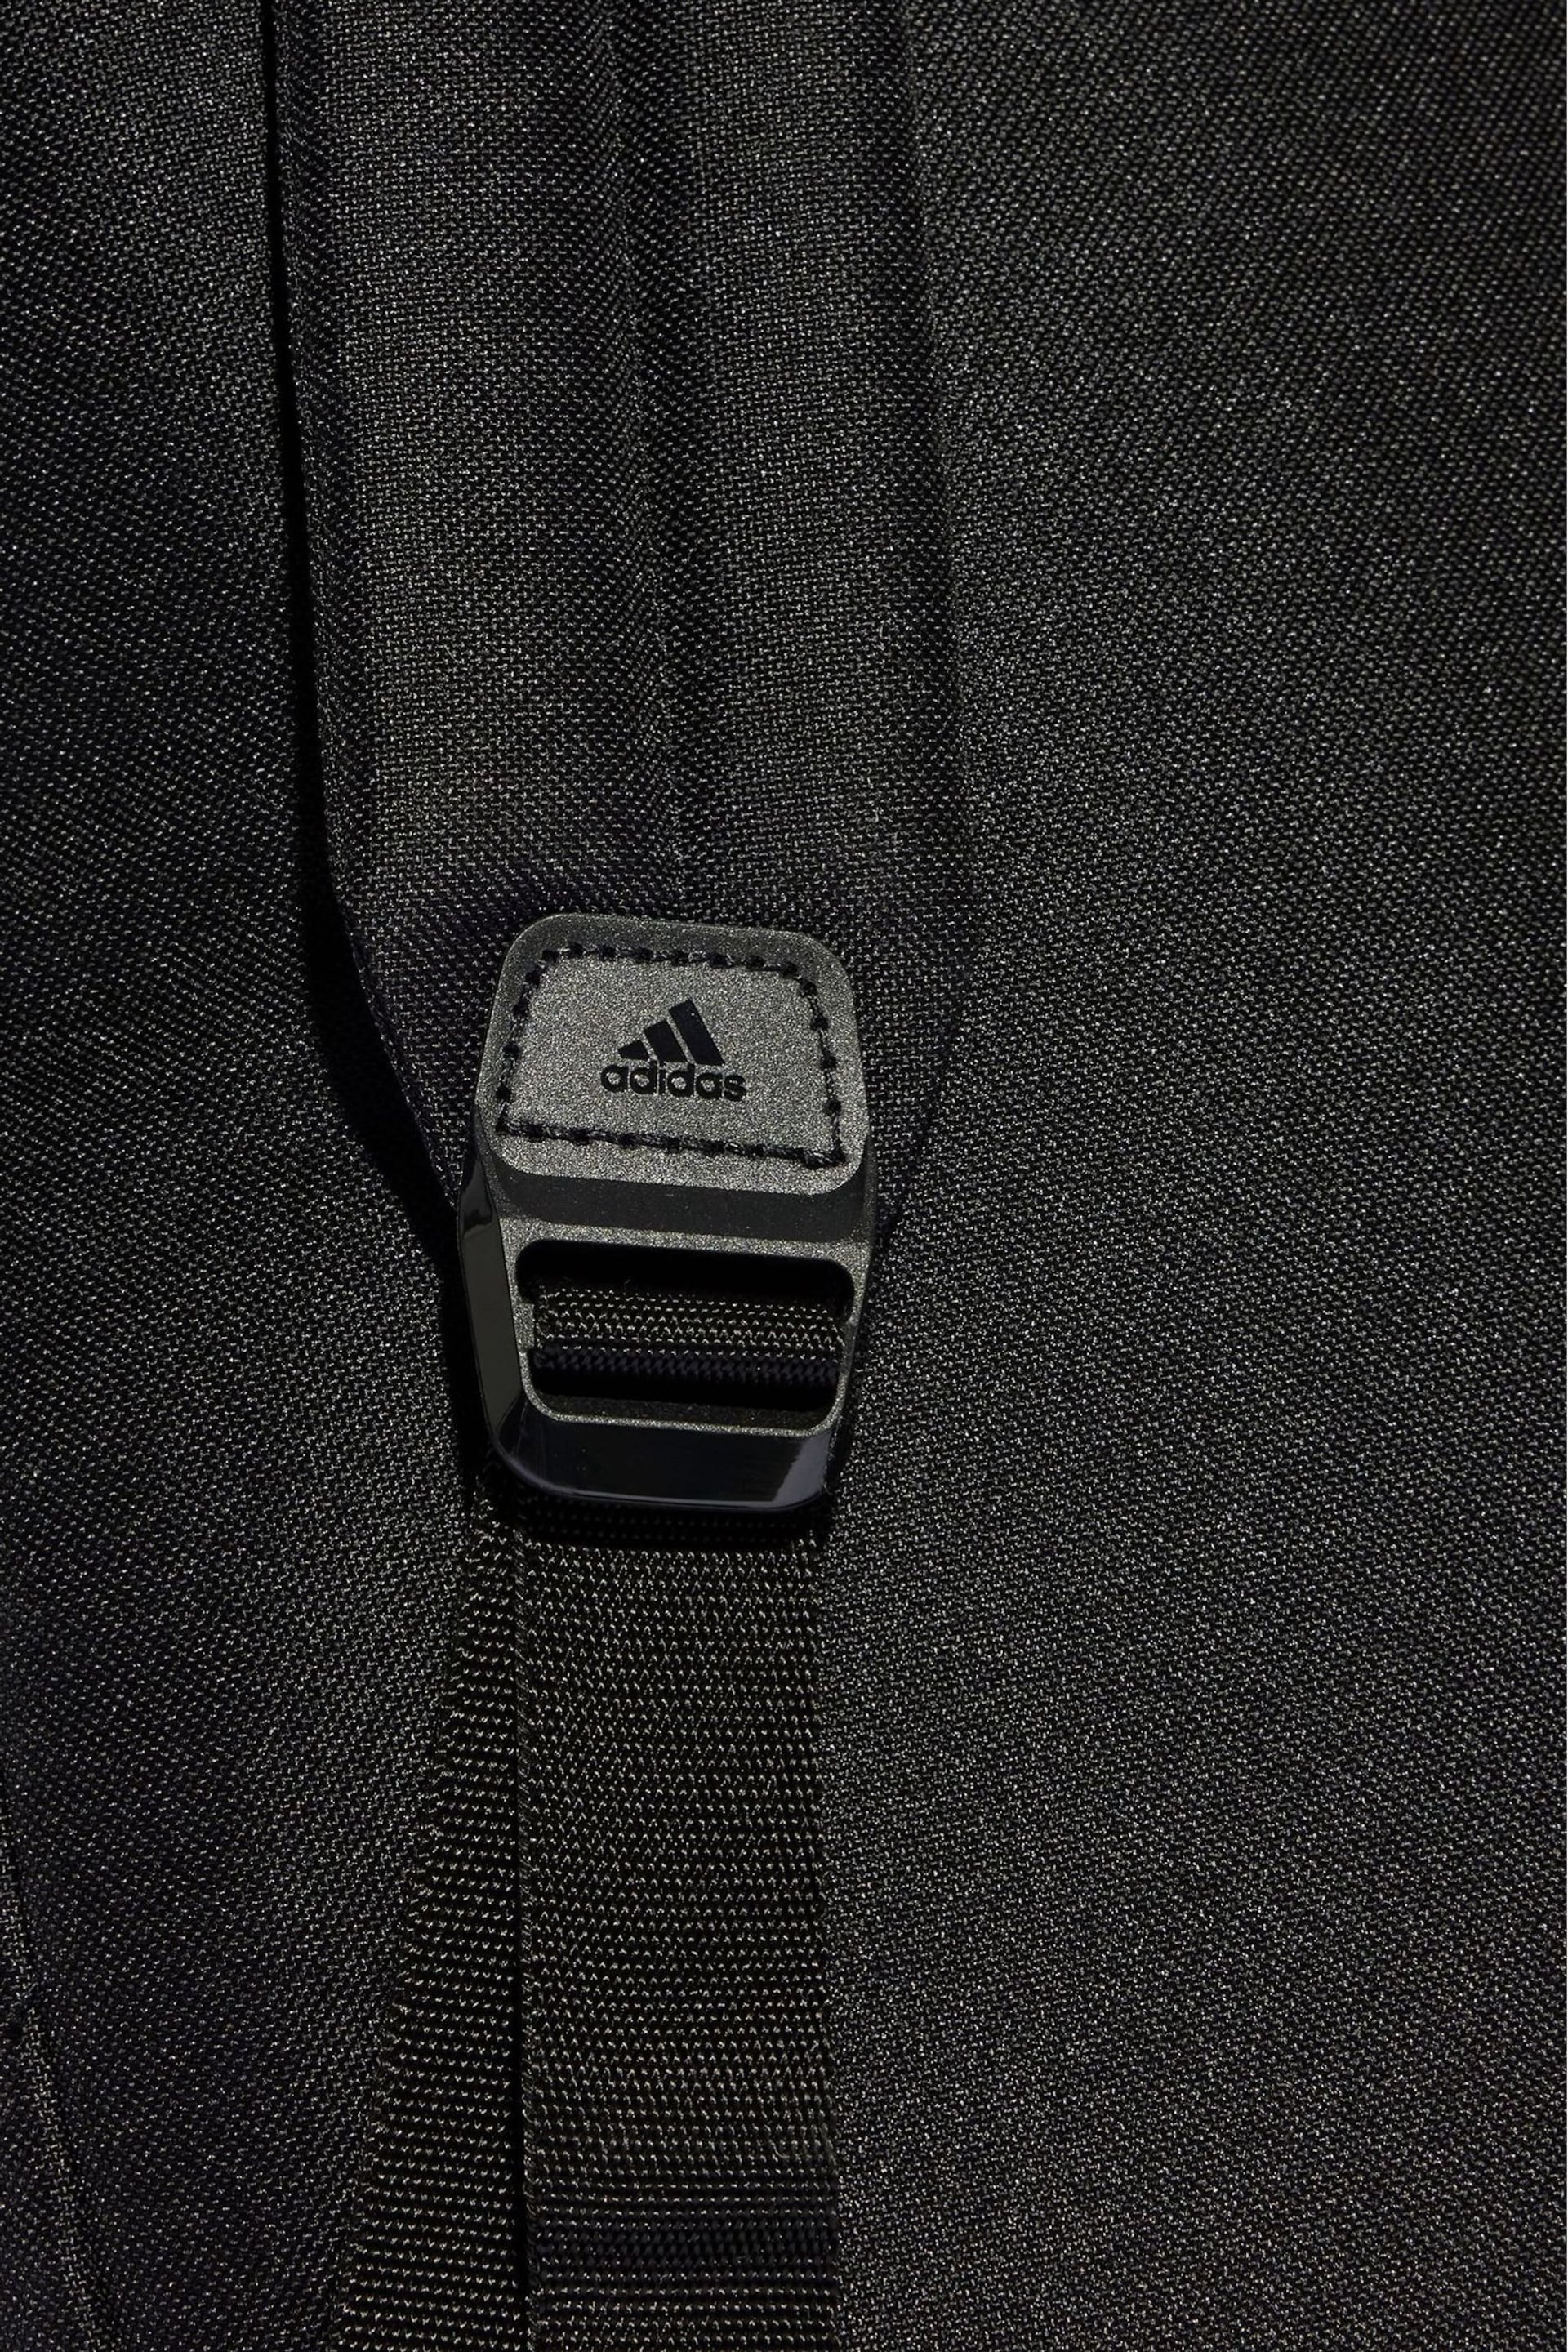 adidas Black Adult Classic Foundation Backpack - Image 6 of 6